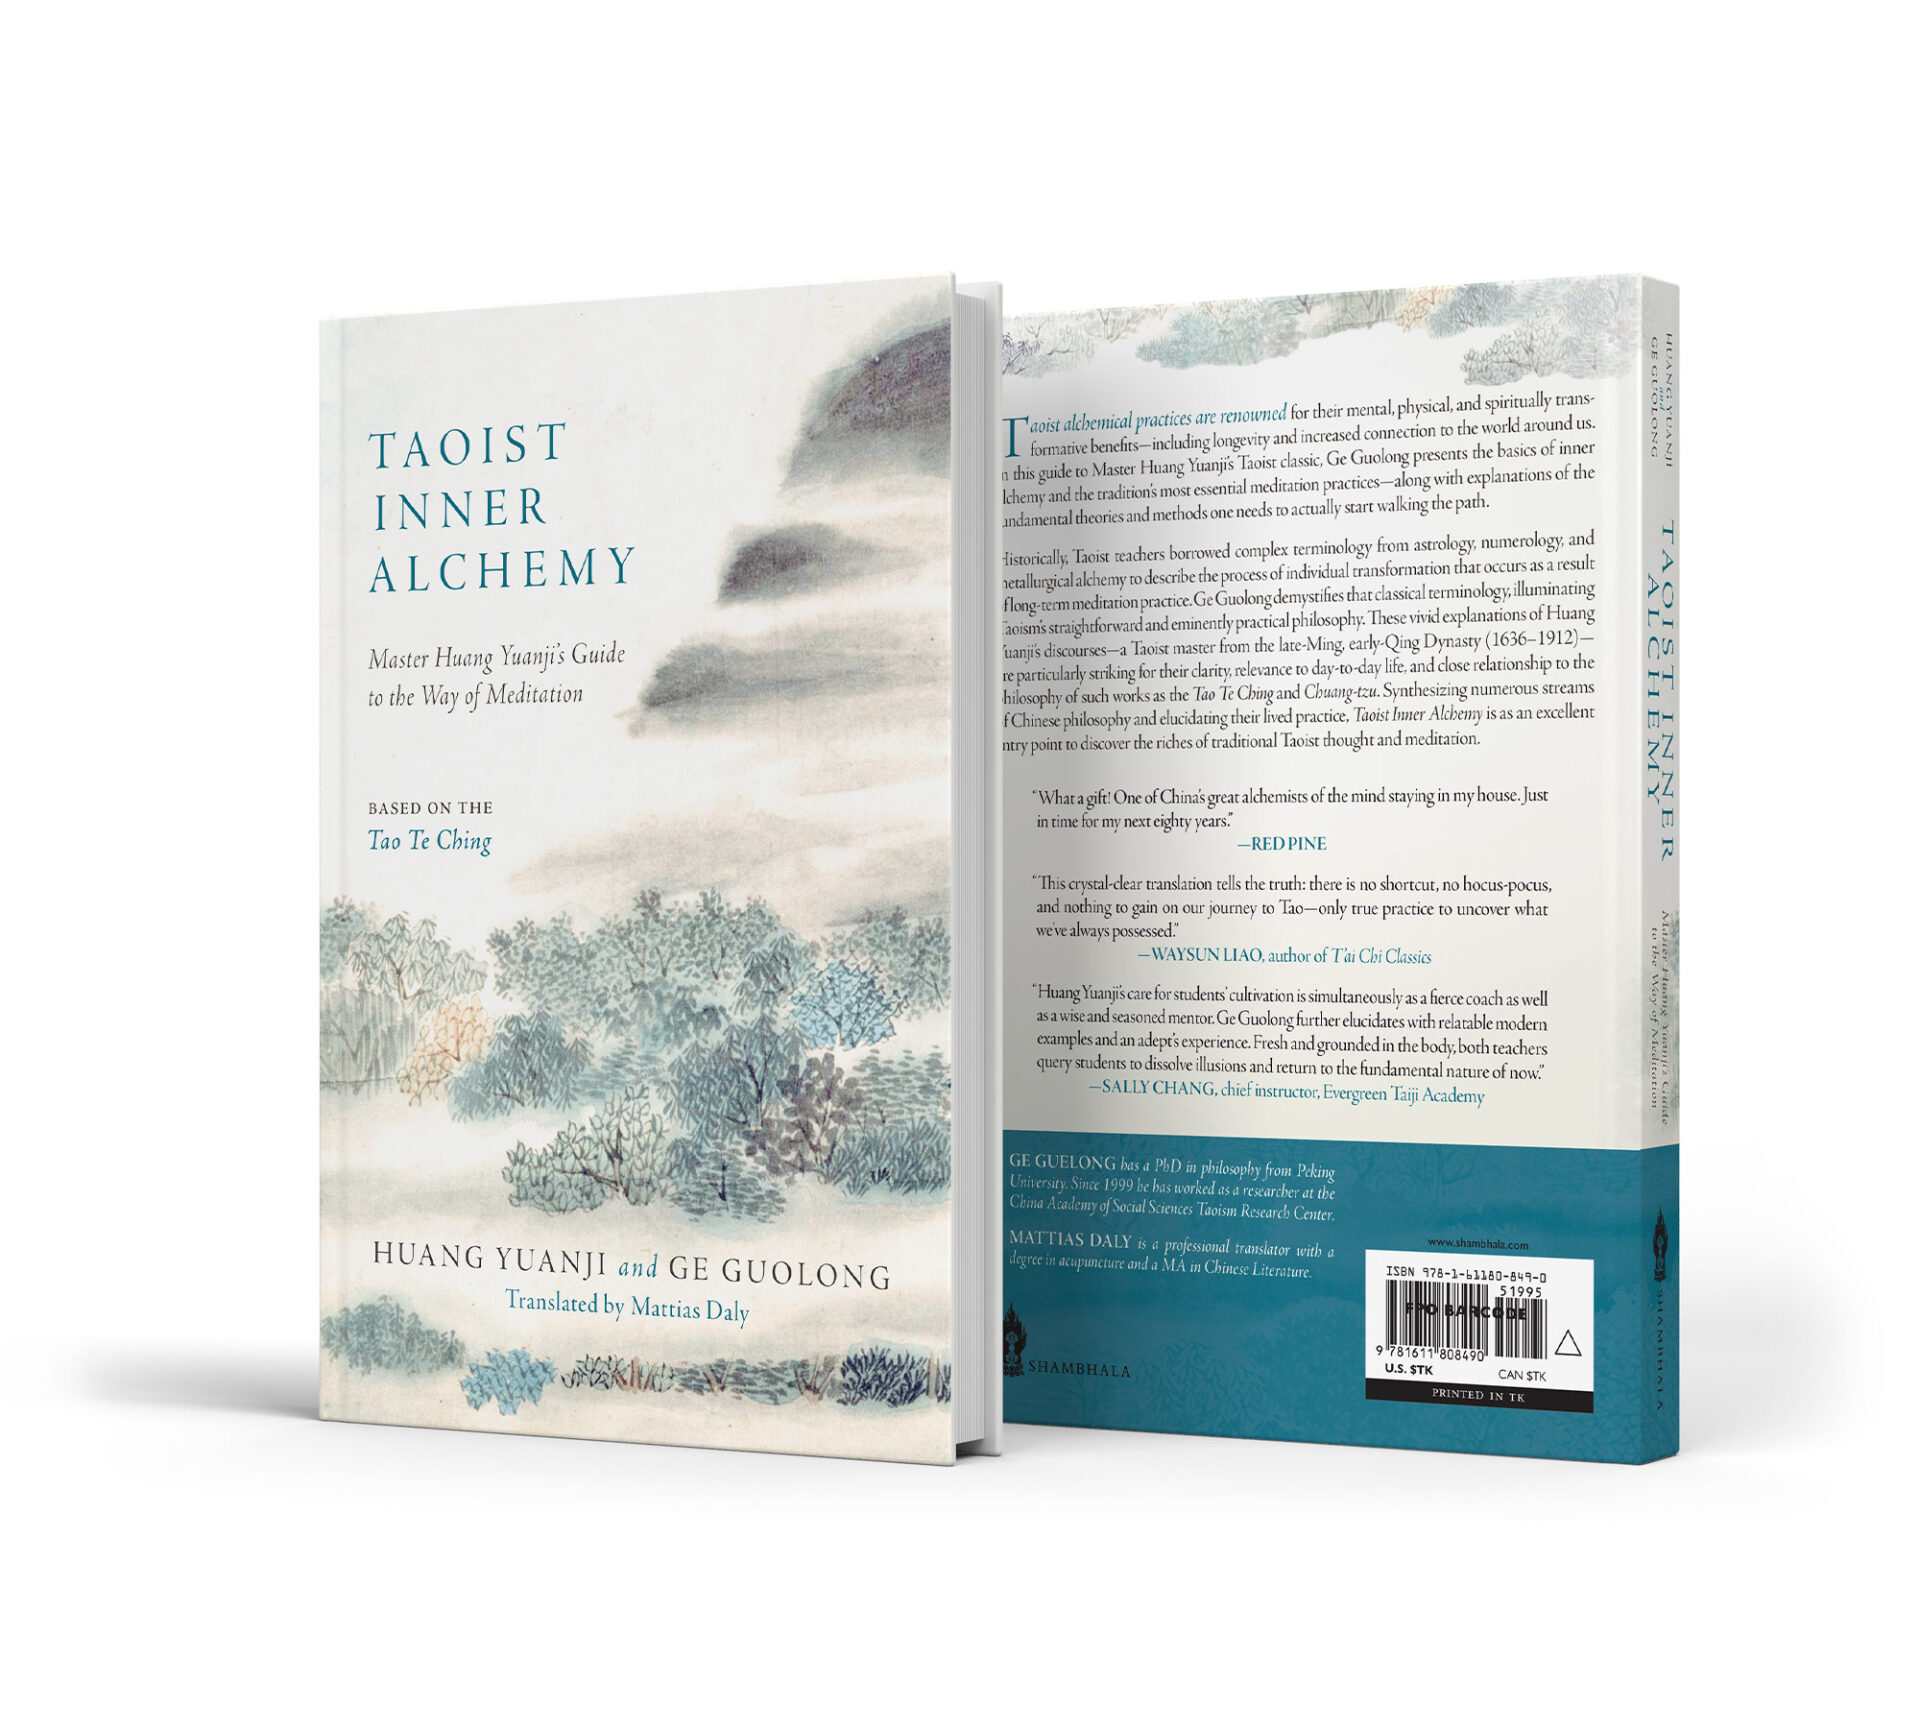 Taoist Inner Alchemy - Nonfiction Book Cover Design for Shambhala Publications.